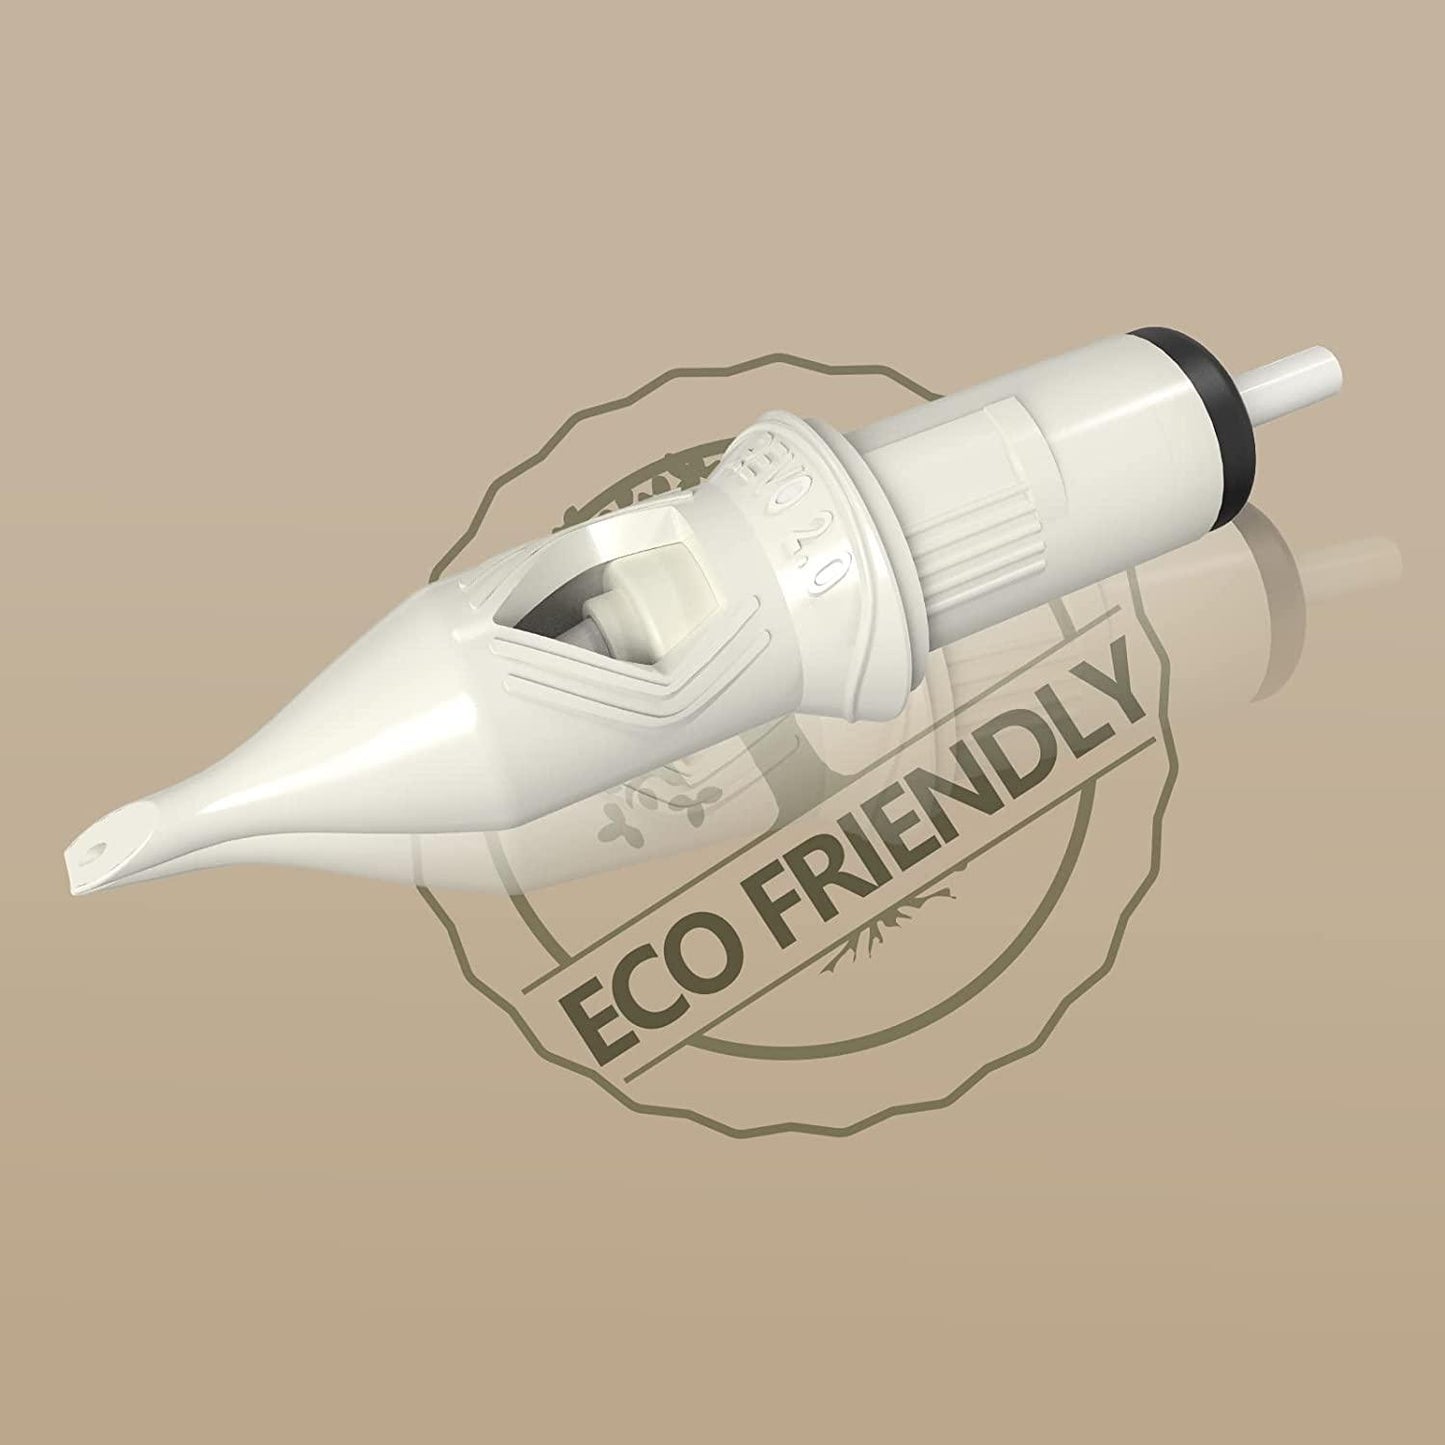 EZ Biodegradable Revo.2.0 Tattoo Needles Cartridges - 10 Bugpins - Tattoo Everything Supplies